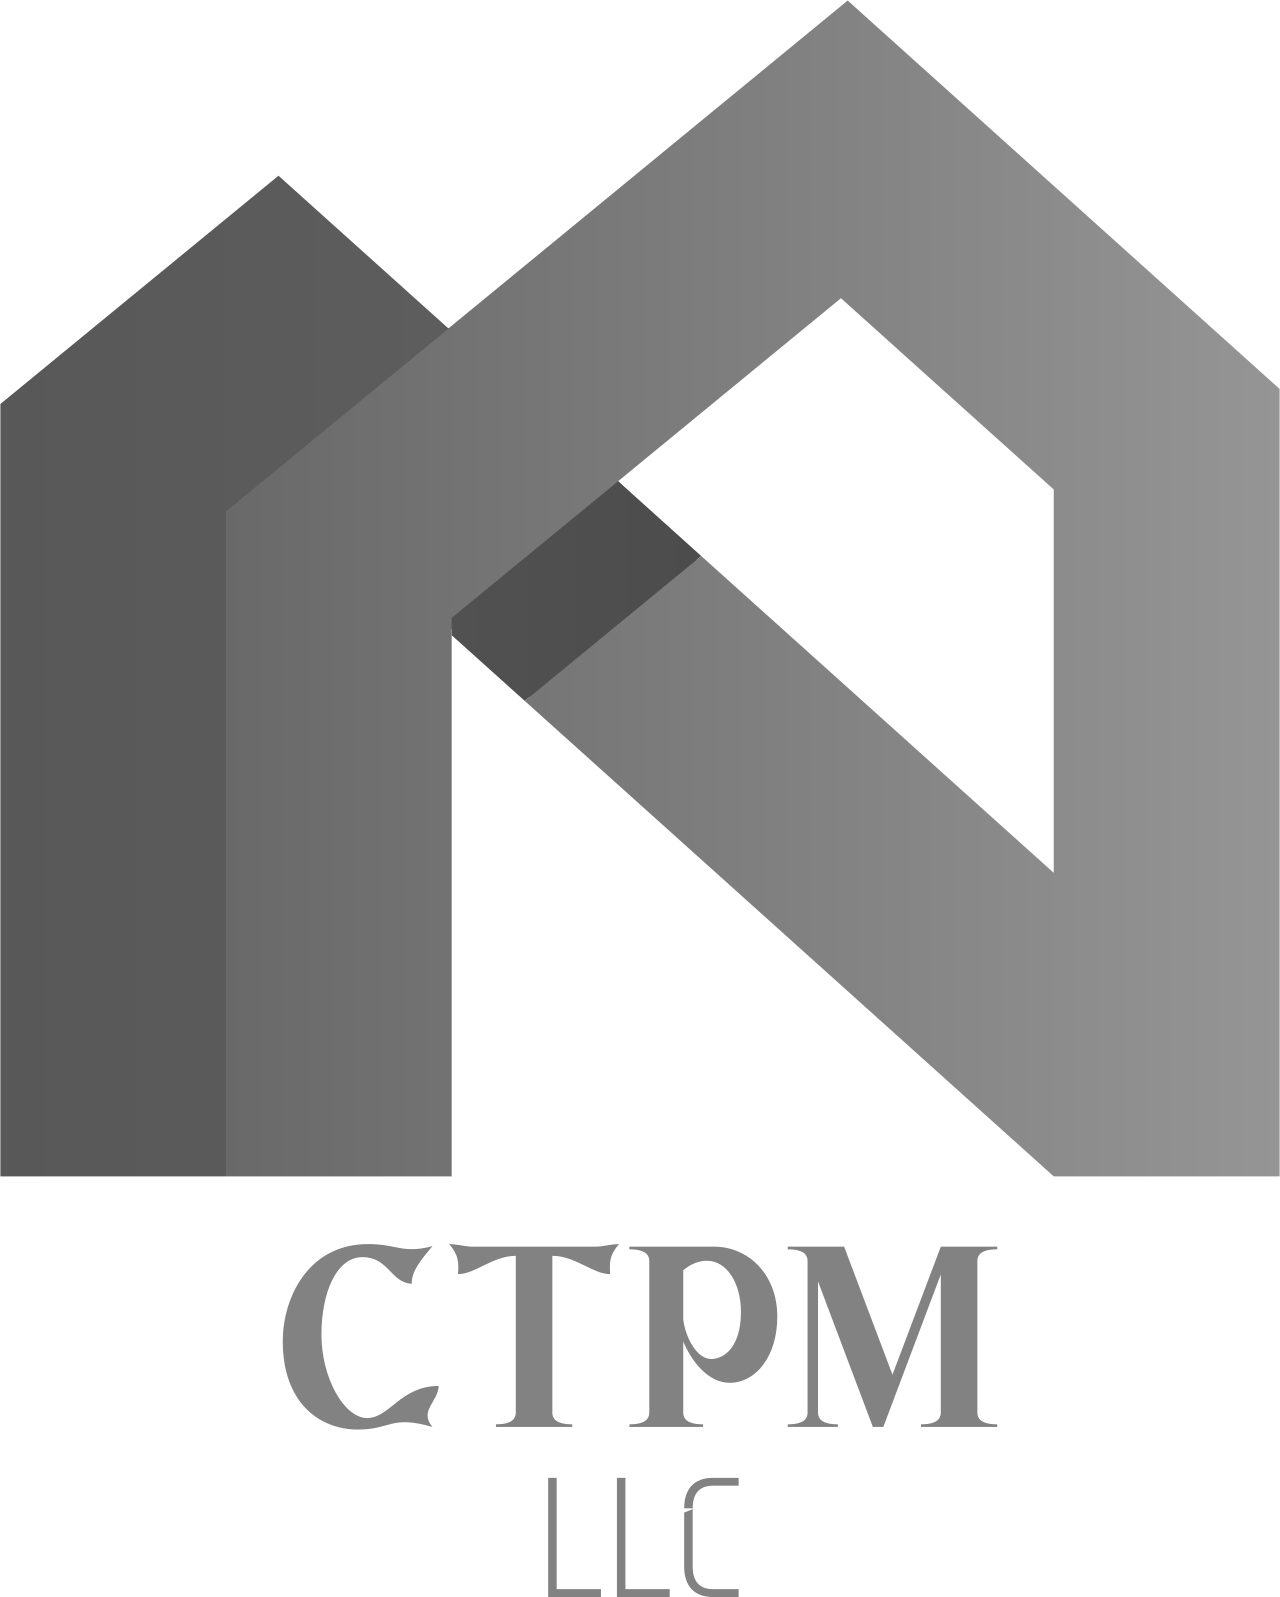 CTPM's logo